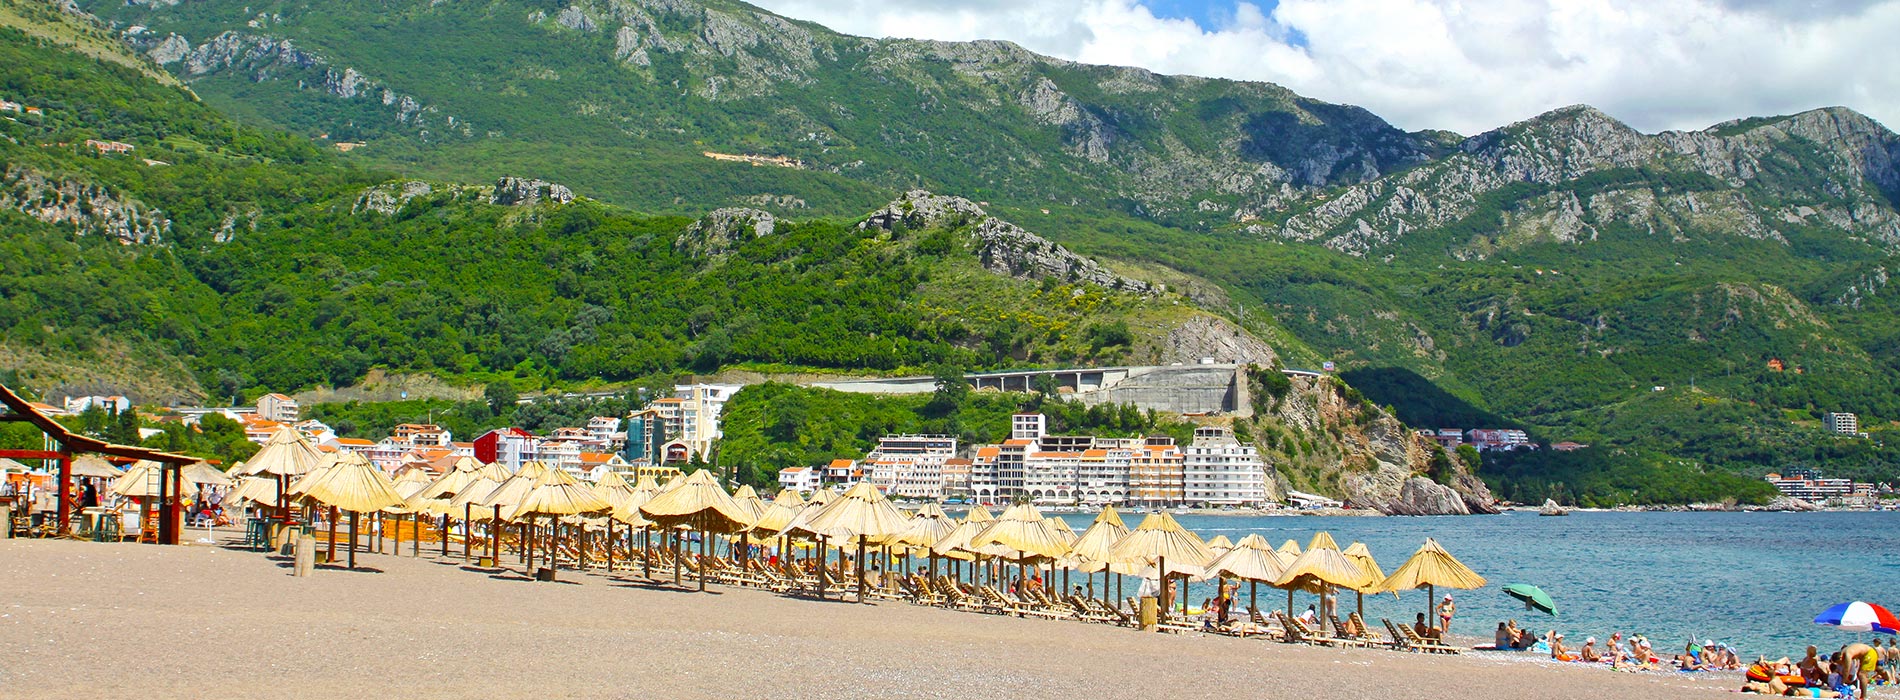 Famous Becici beach near Budva, Montenegro.jpg